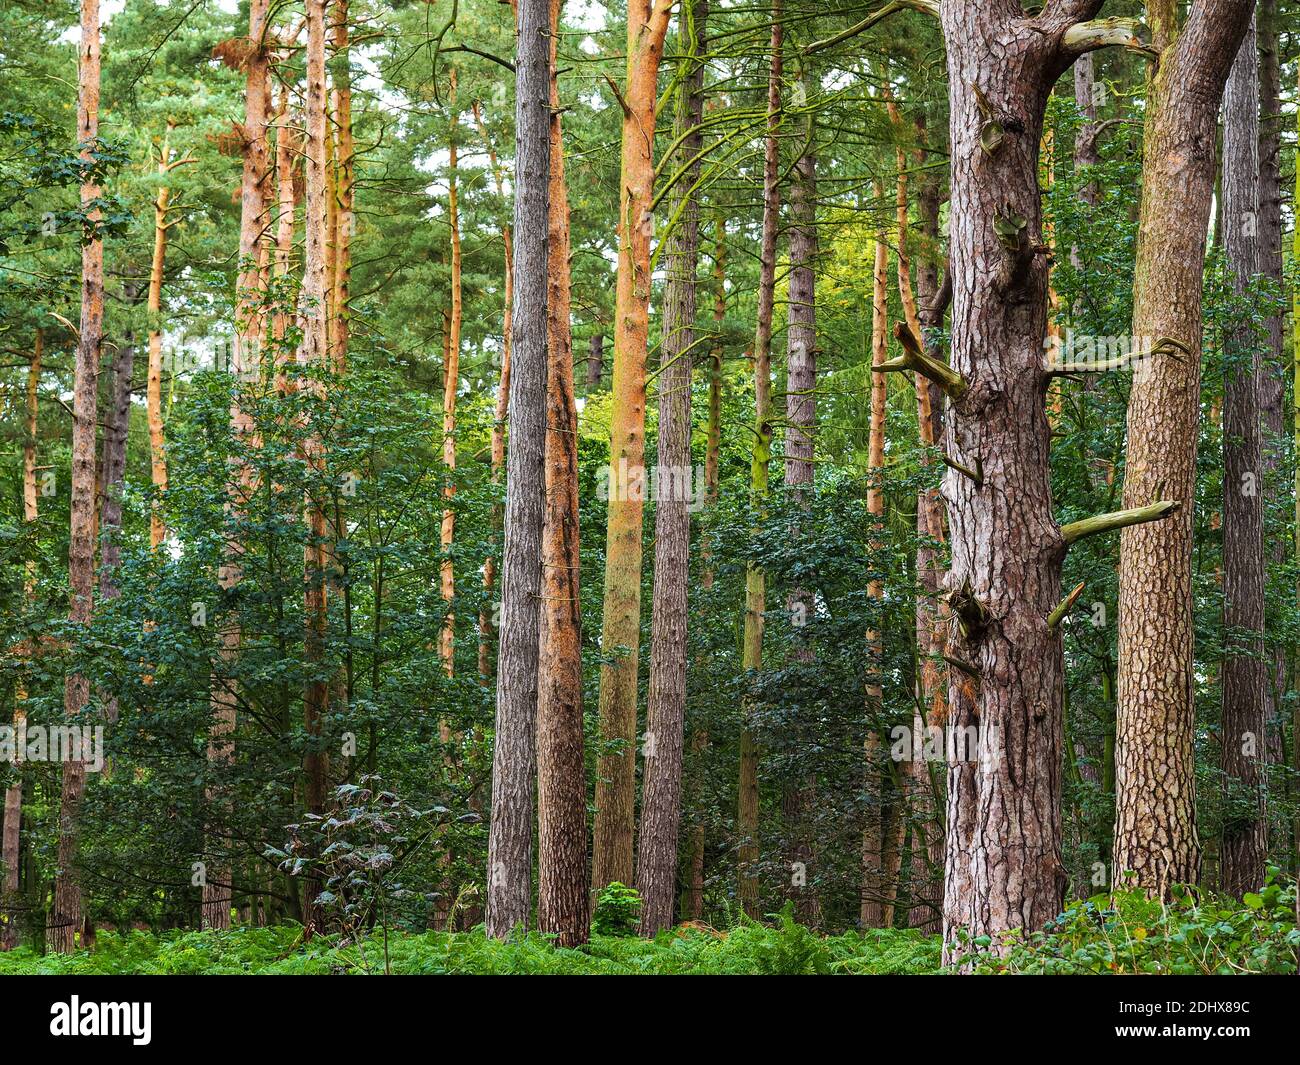 Autumn sunlight shining on tall dense tree trunks in an English wood Stock Photo